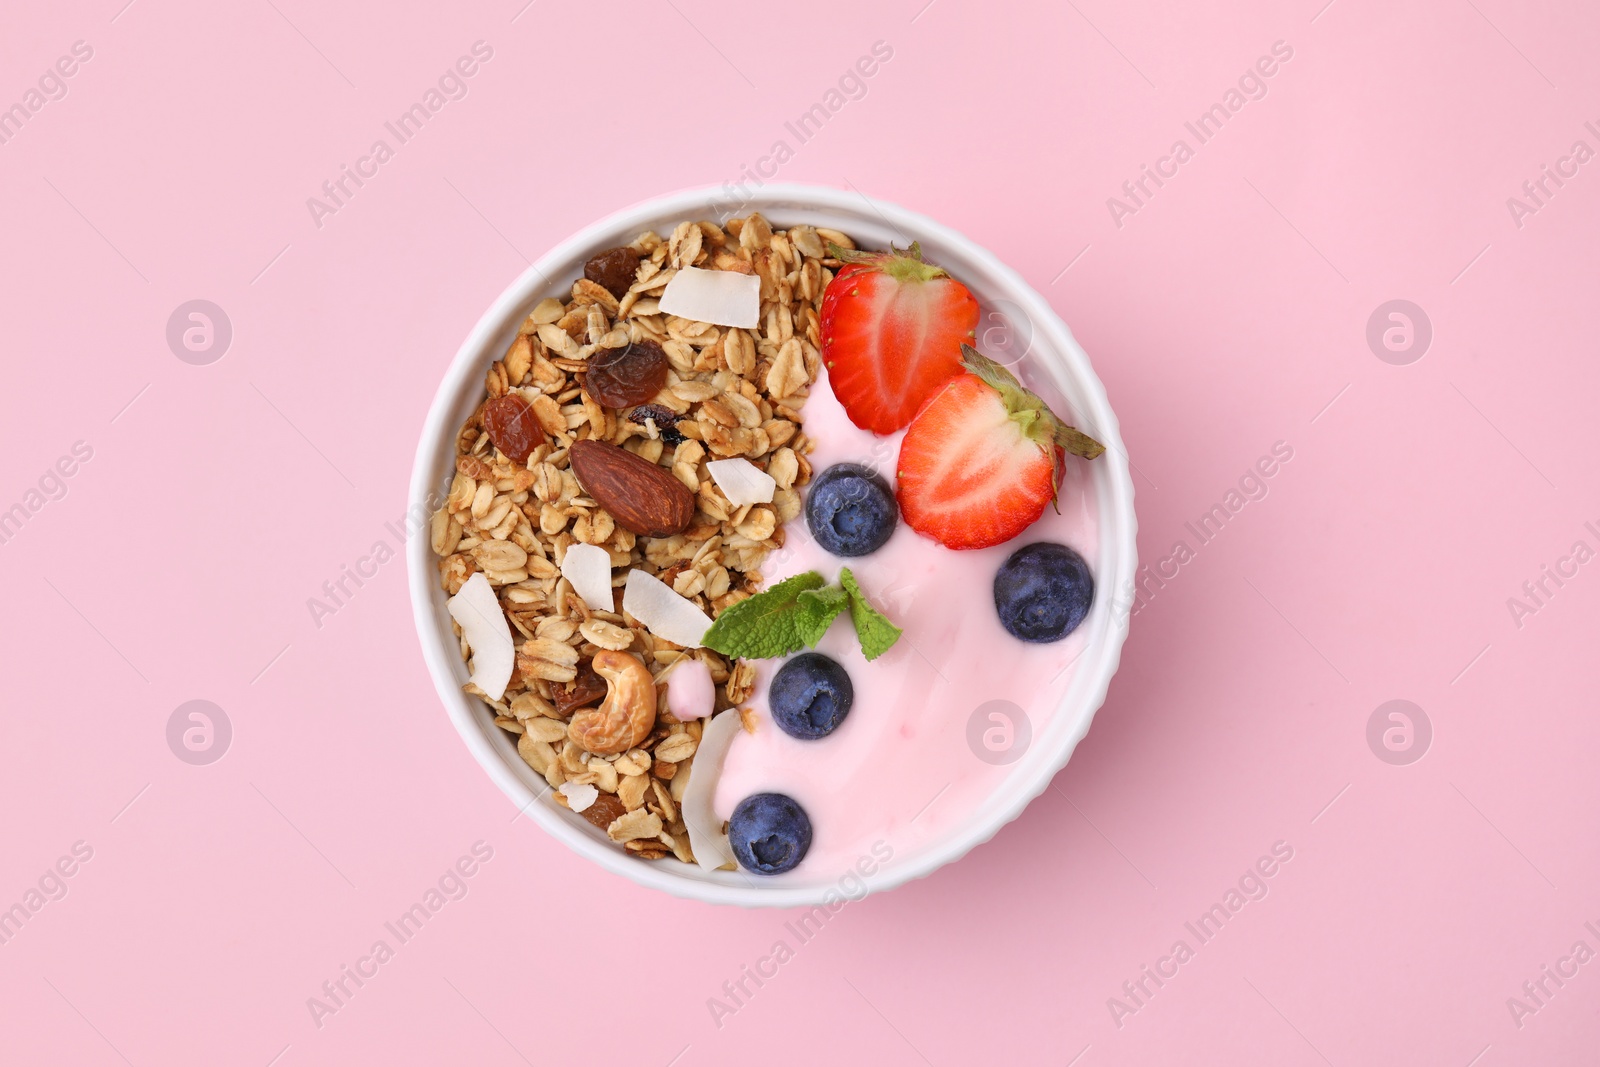 Photo of Tasty granola, yogurt and fresh berries in bowl on pink background, top view. Healthy breakfast